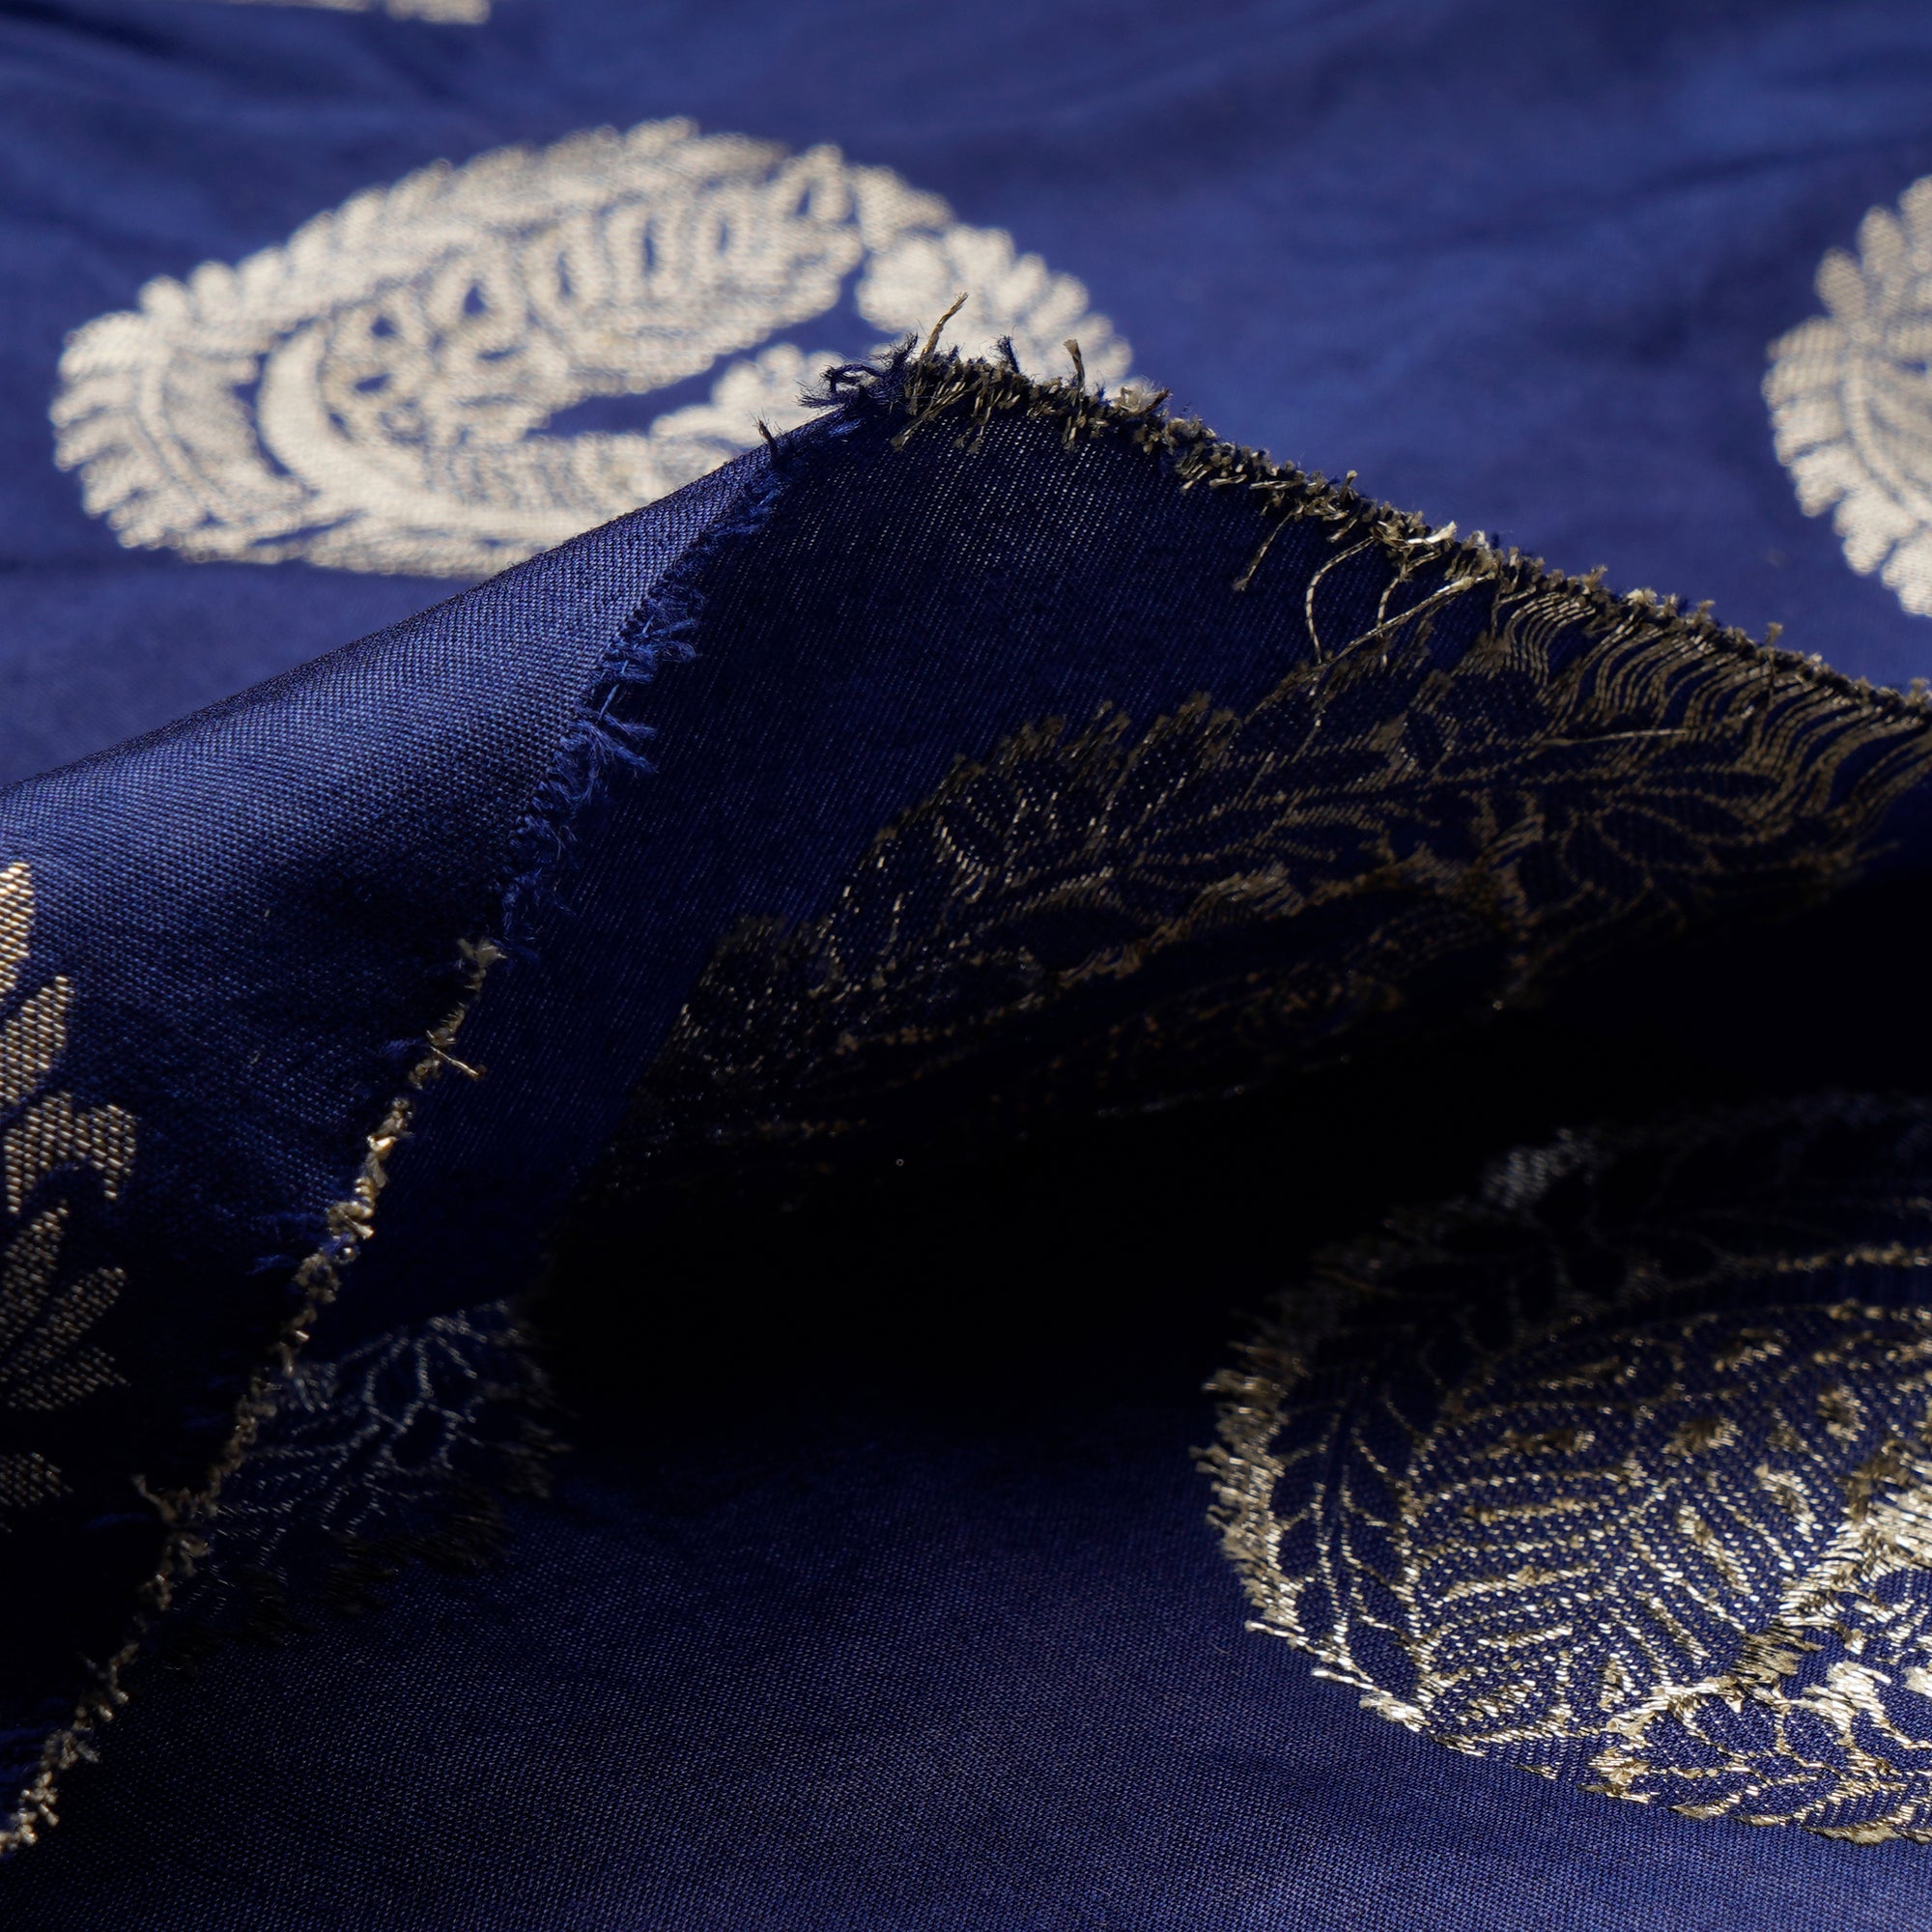 Bellwether Blue Floral Booti Pattern Blended Banarasi Brocade Fabric